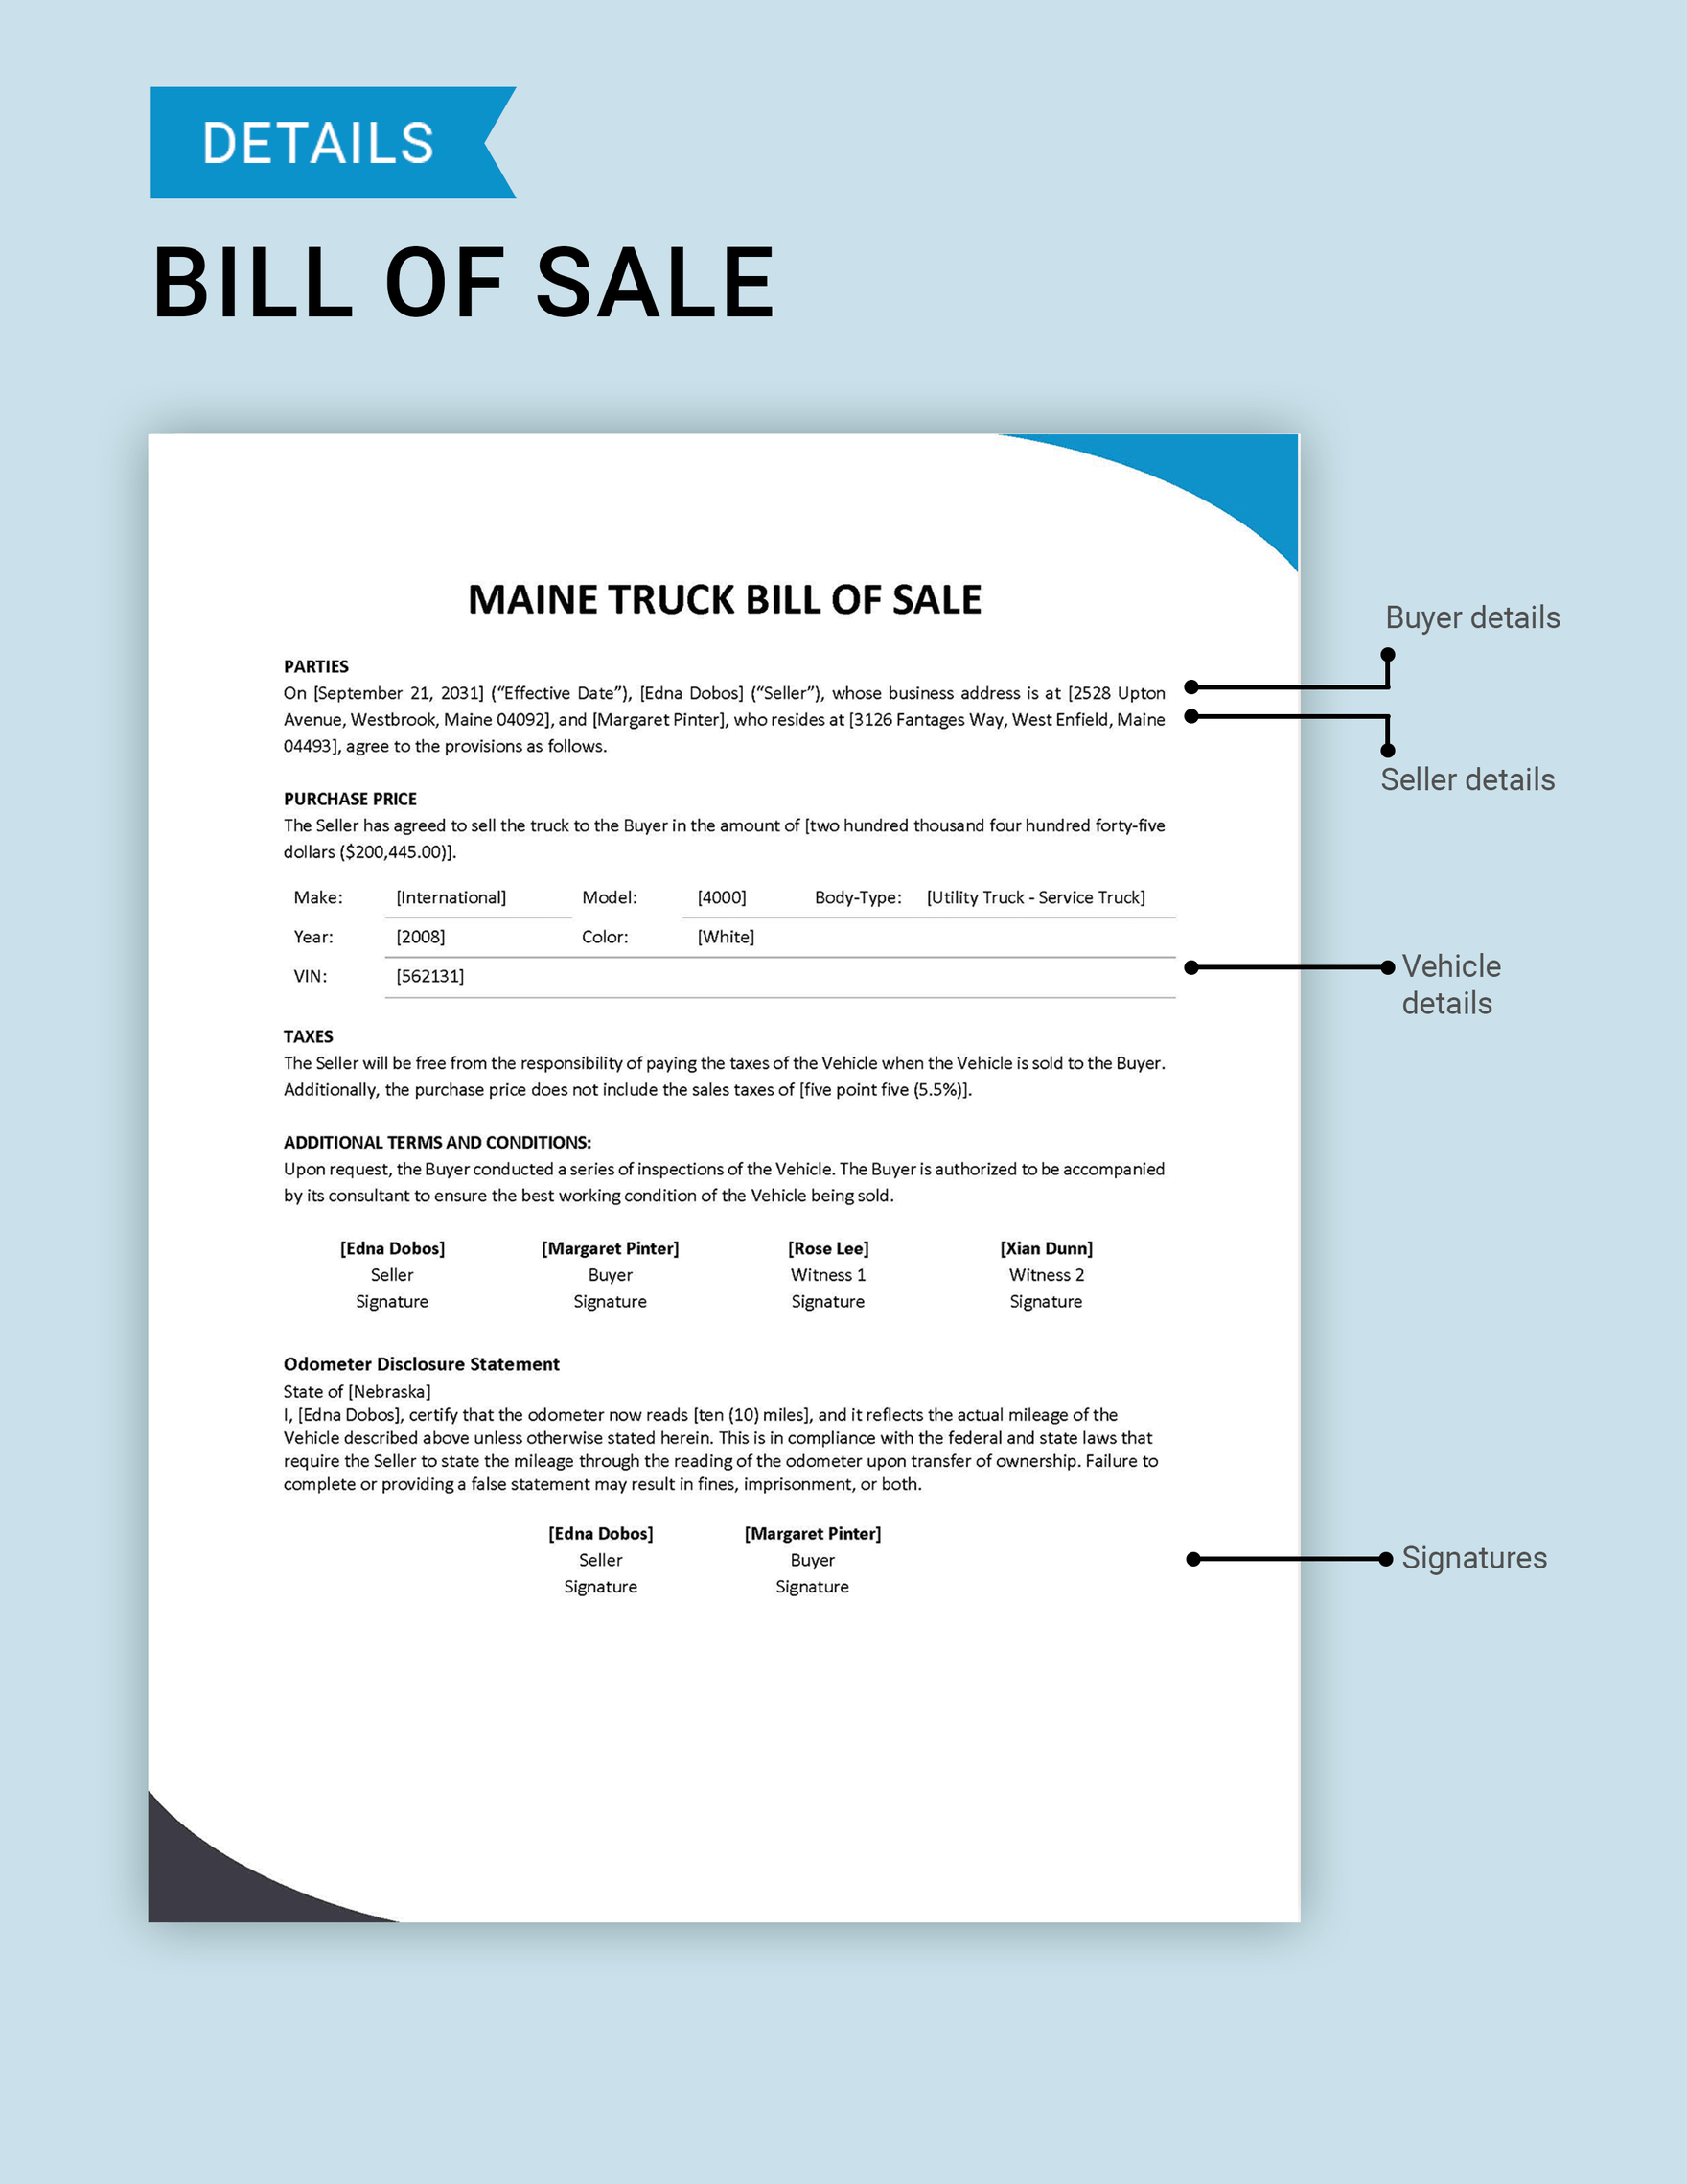 Maine Truck Bill of Sale Template